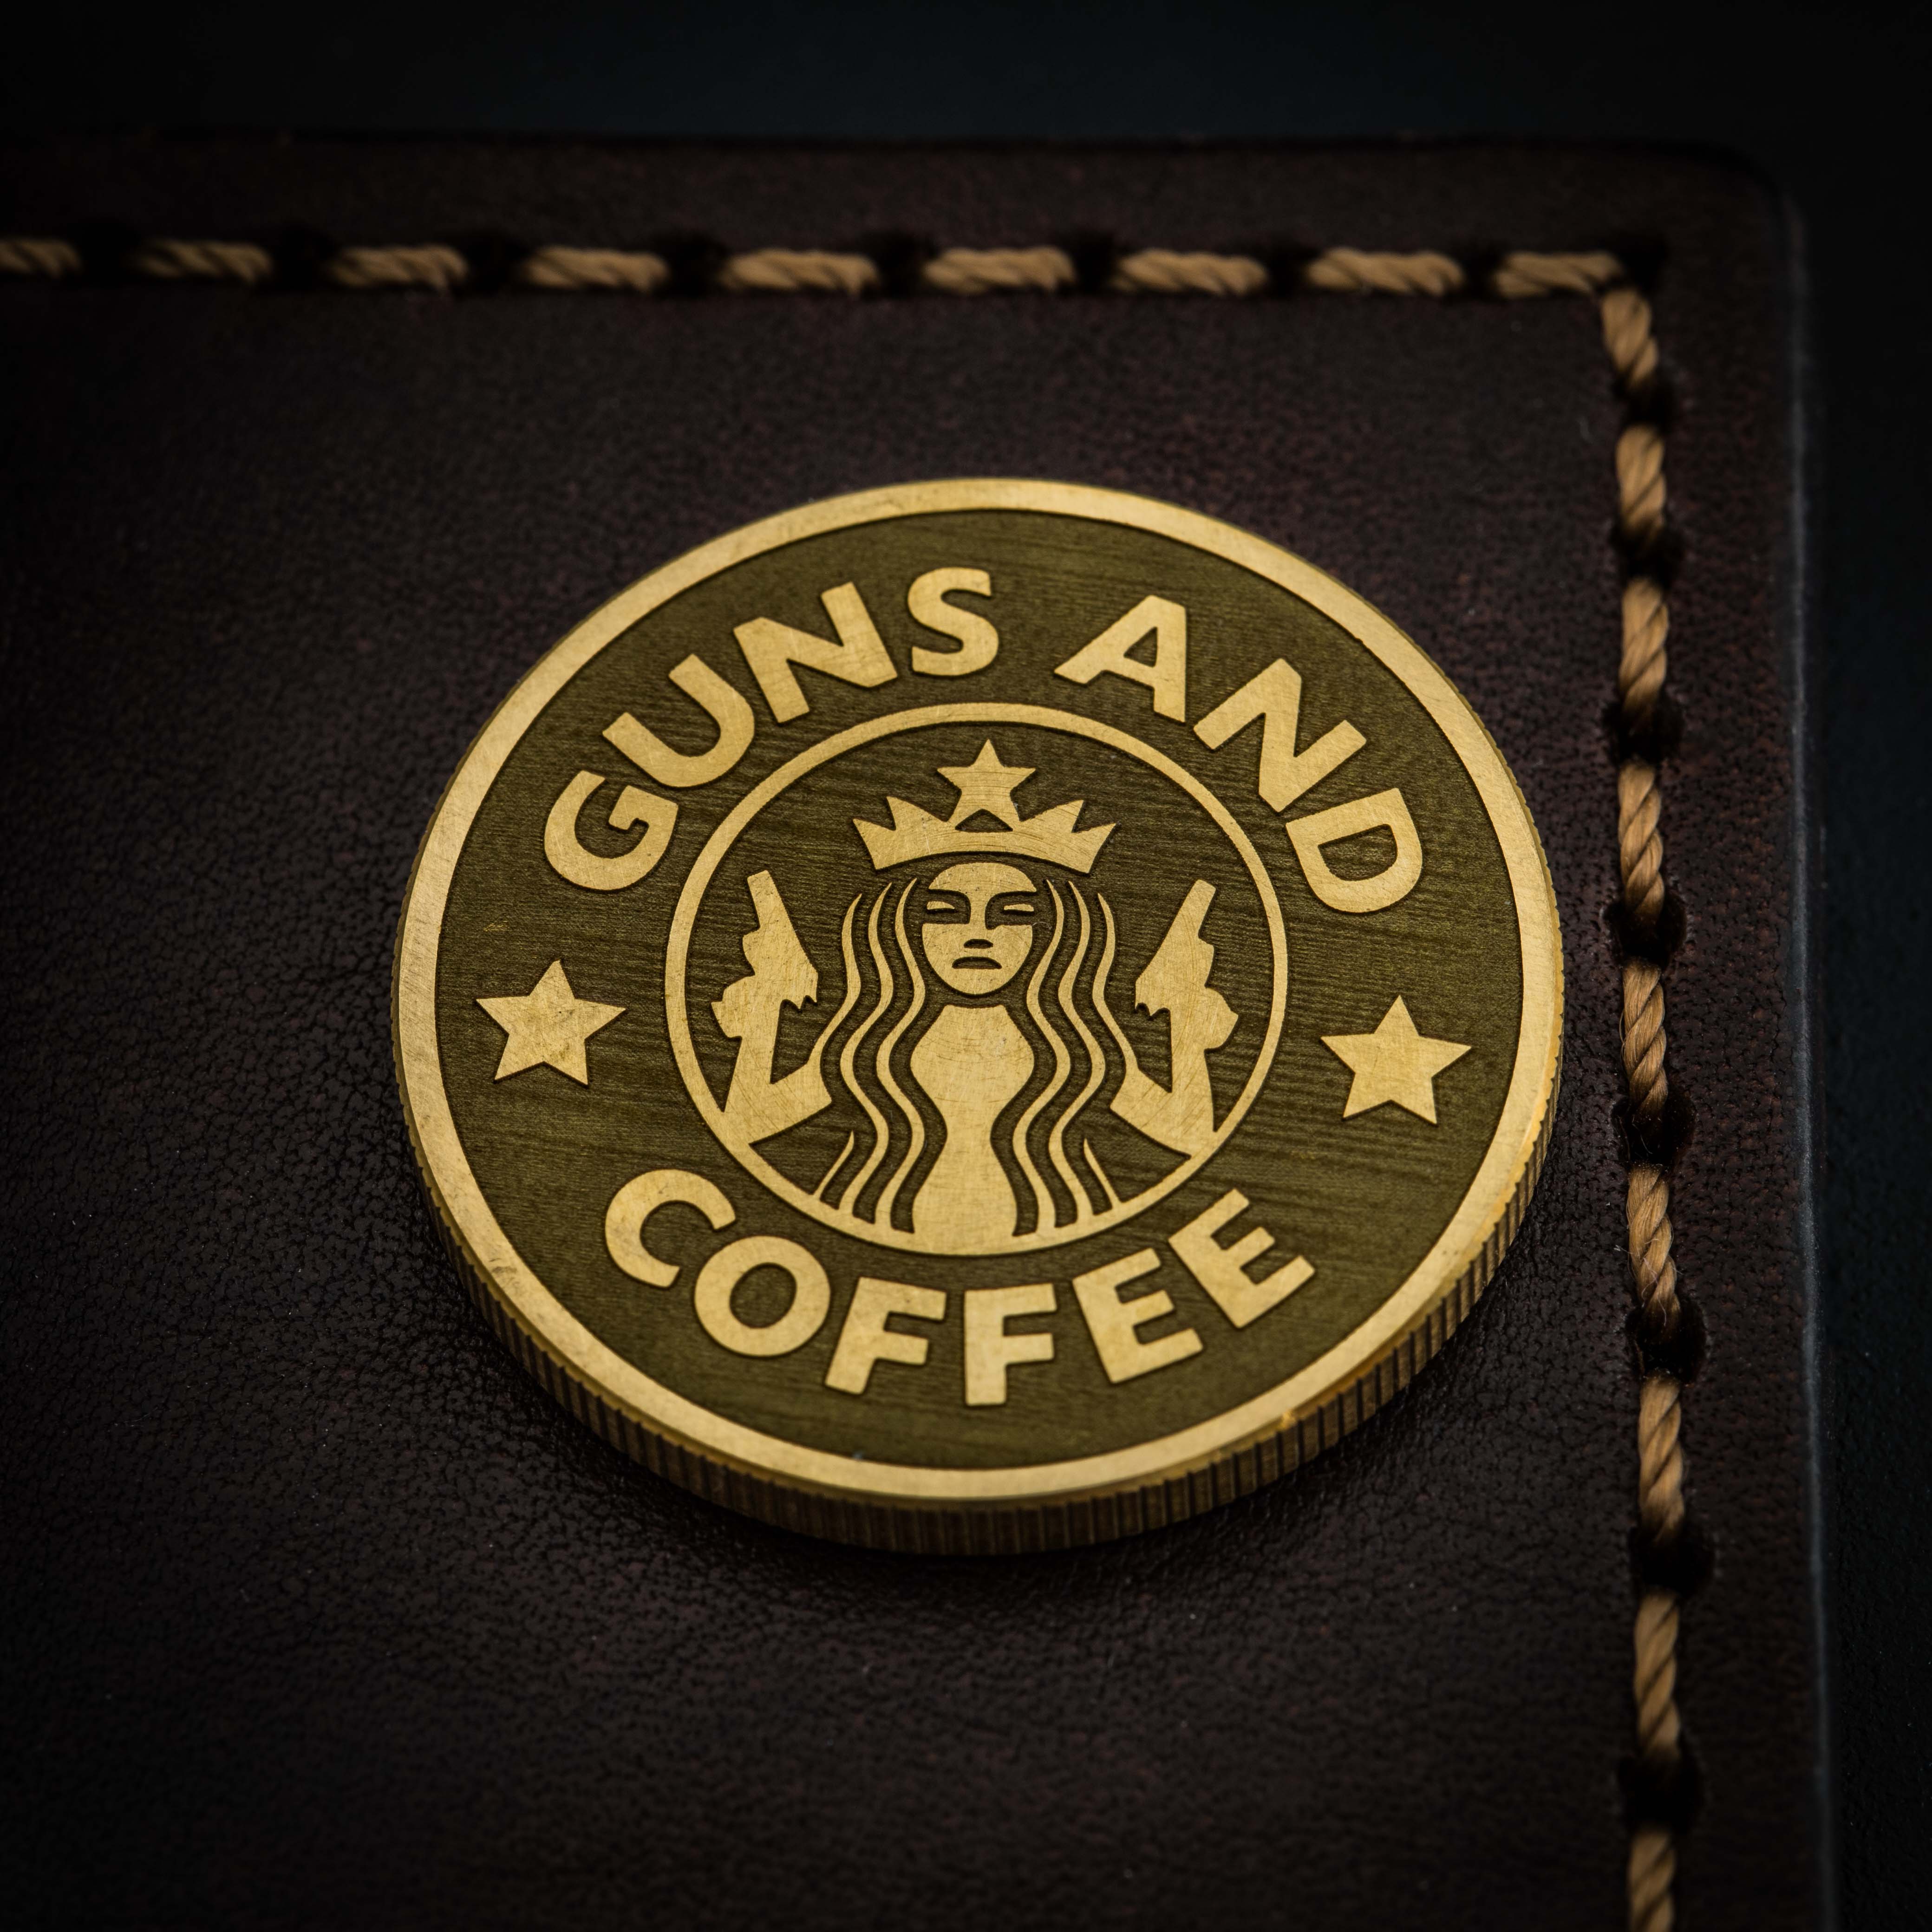 Mince guns a coffee